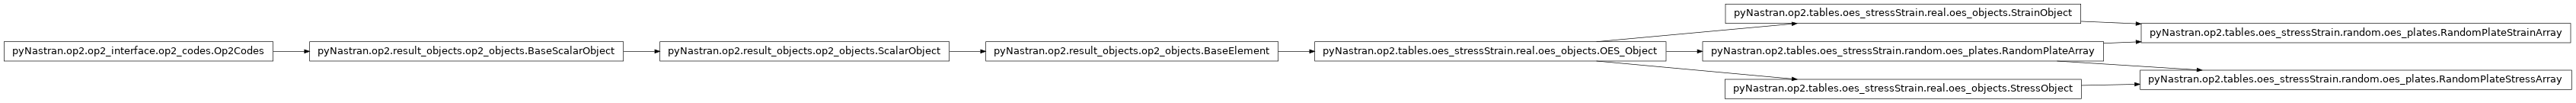 Inheritance diagram of pyNastran.op2.tables.oes_stressStrain.random.oes_plates